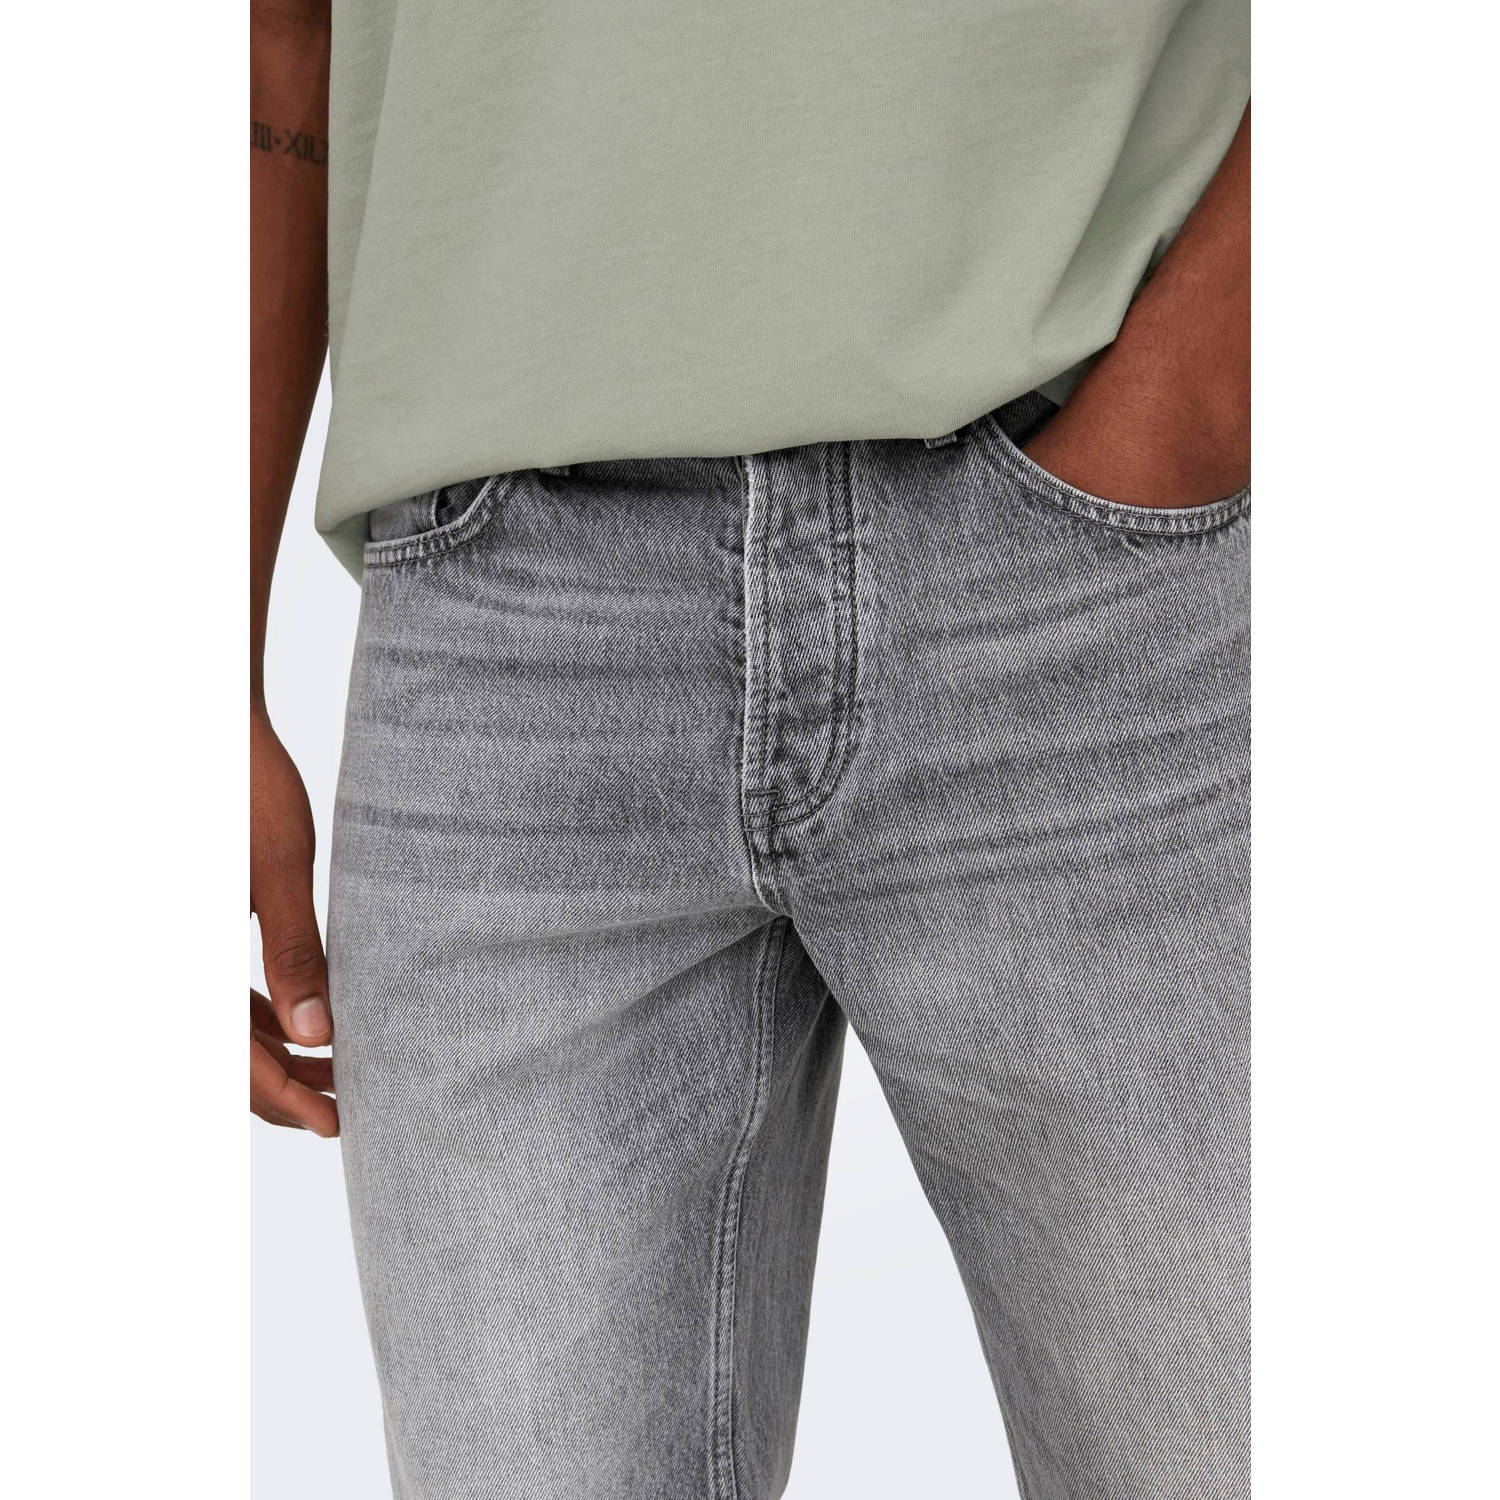 ONLY & SONS straight fit jeans ONSEDGE 8202 medium grey denim